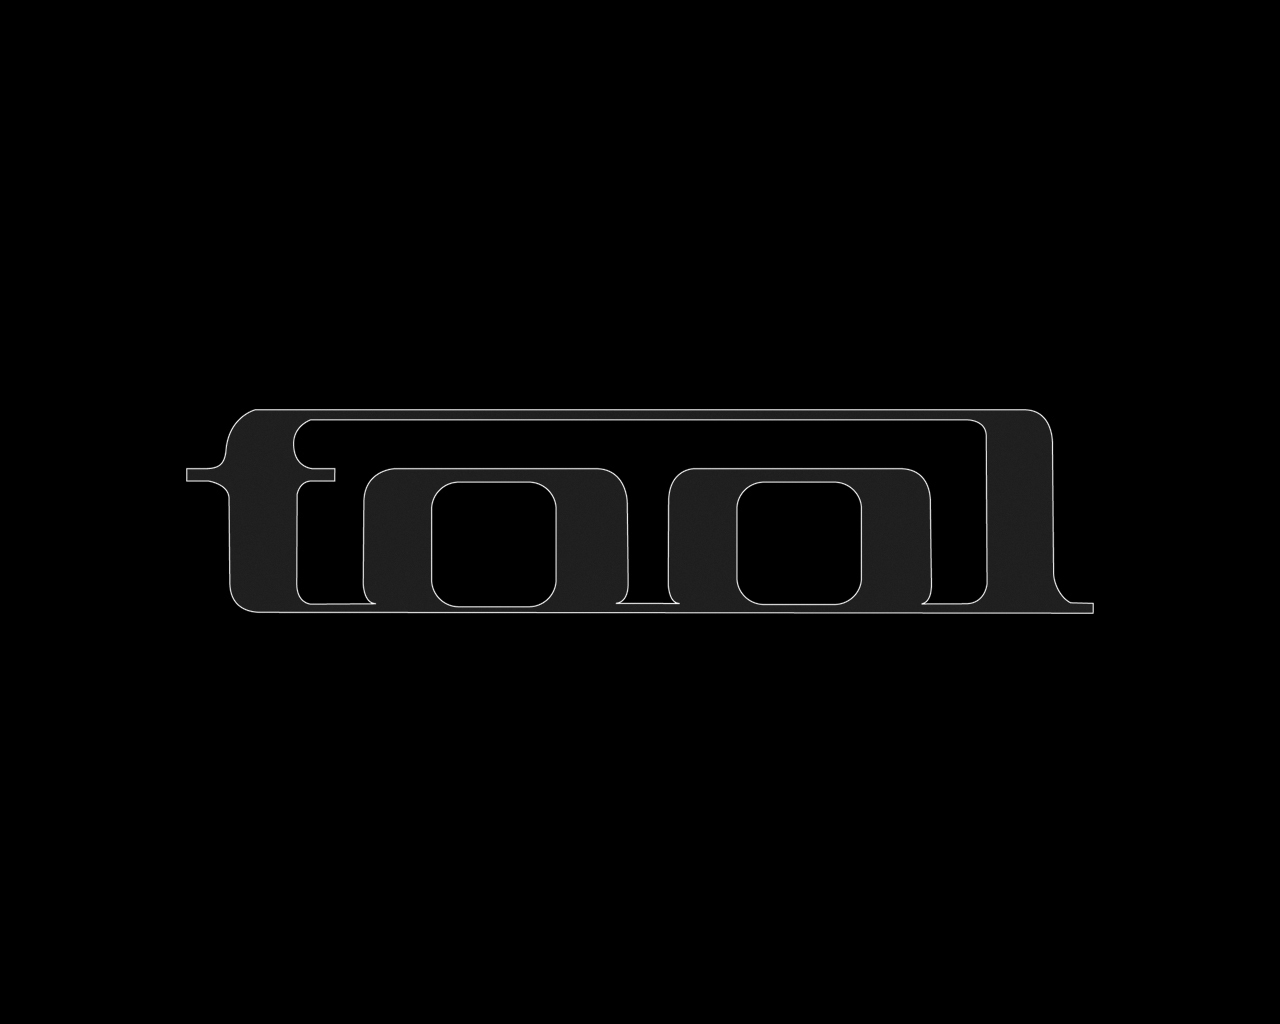 Tool - Tool Wallpaper (10560813) - Fanpop